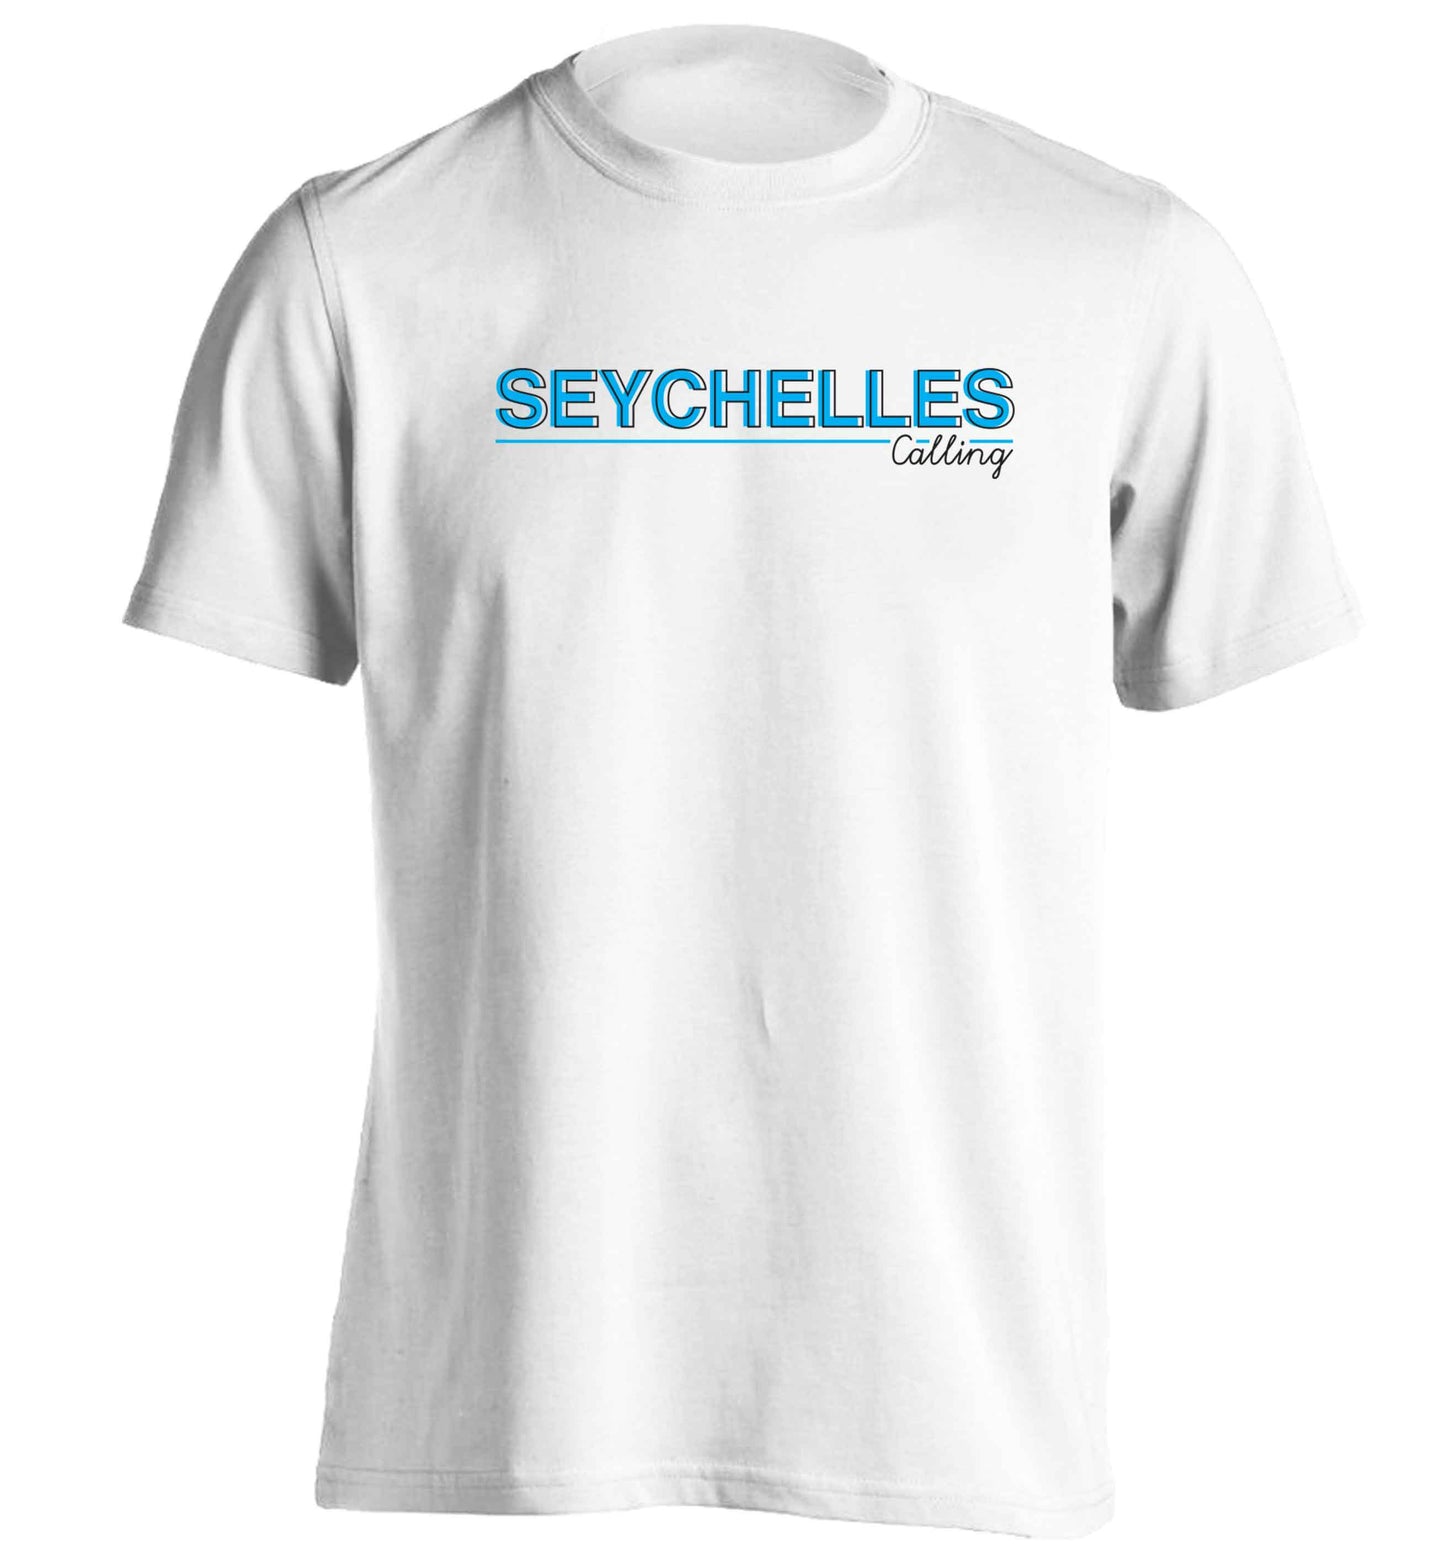 Seychelles calling adults unisex white Tshirt 2XL